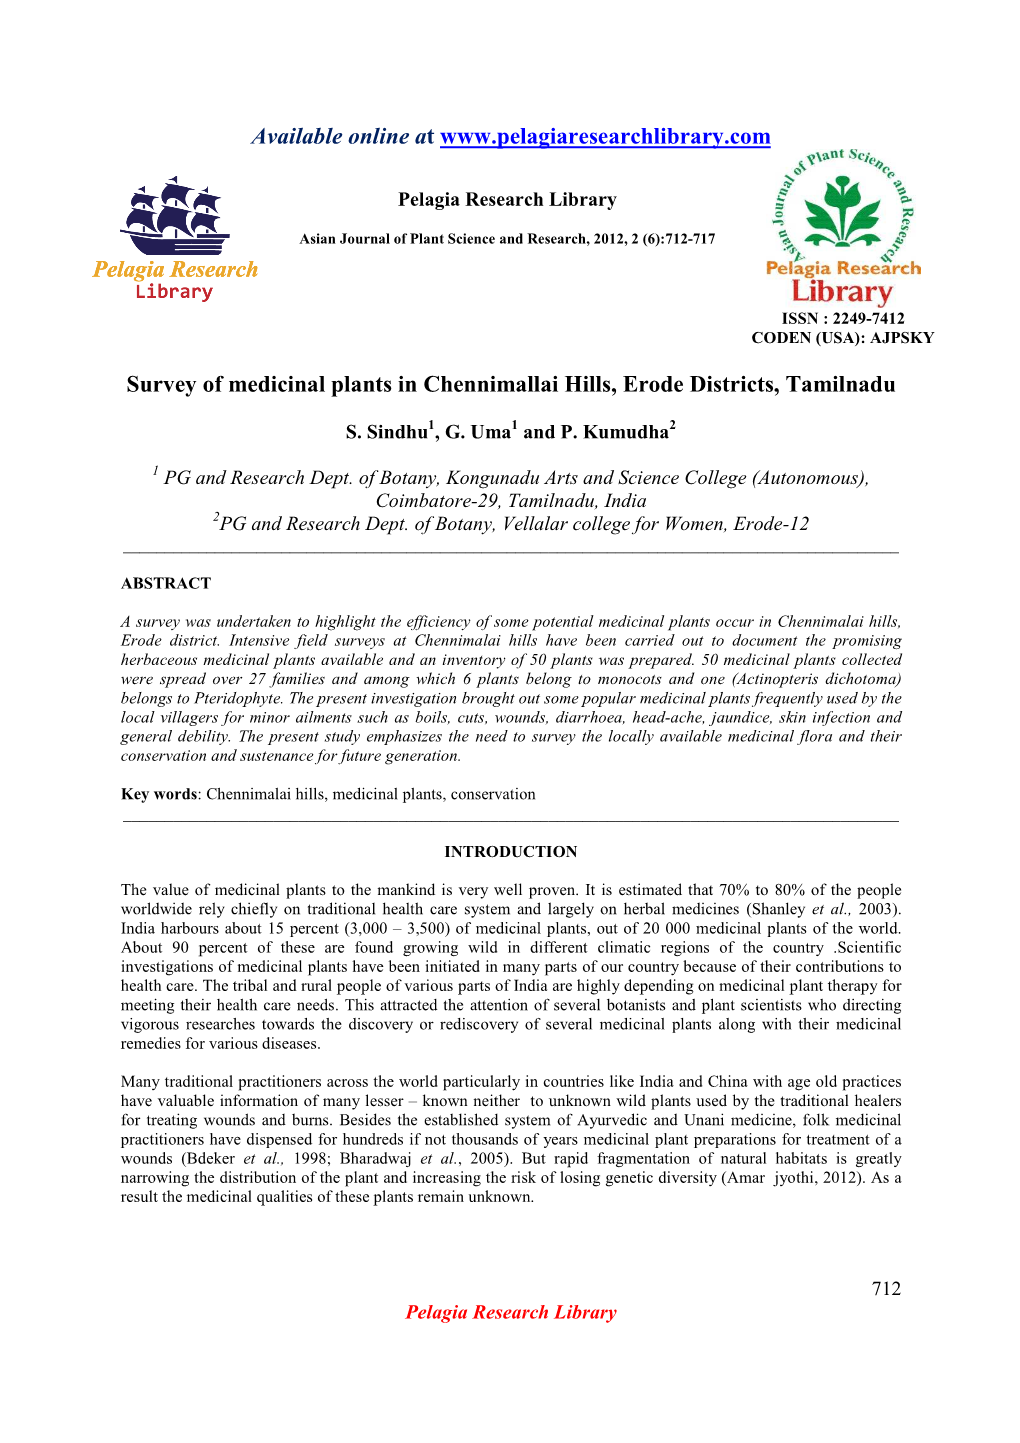 Survey of Medicinal Plants in Chennimallai Hills, Erode Districts, Tamilnadu